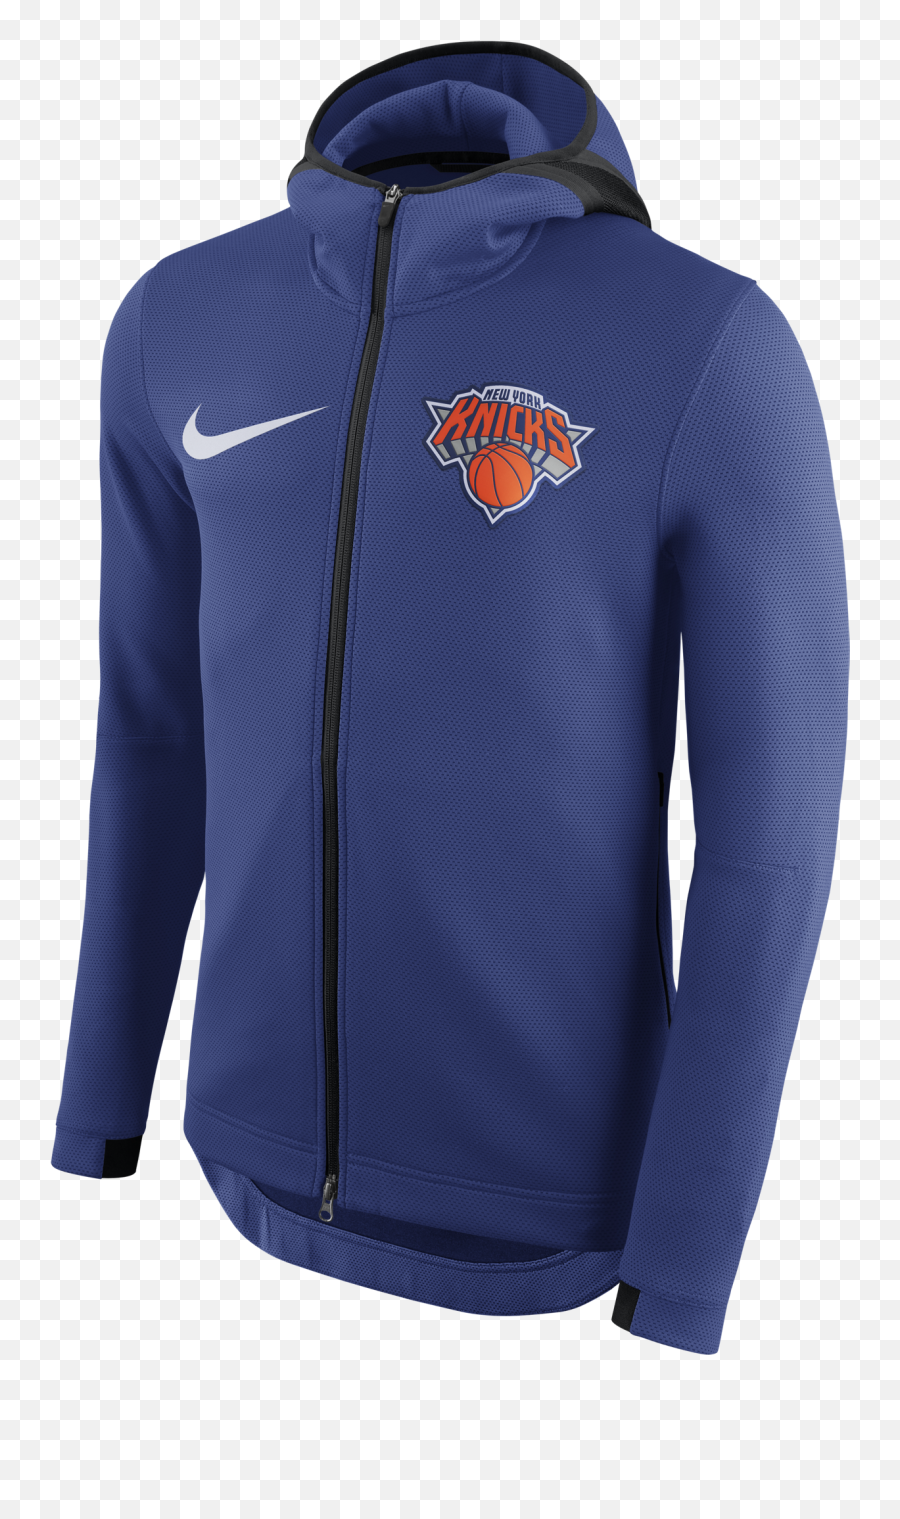 Nike Nba New York Knicks Thermaflex - Portland Trail Blazers Jacket Png,Knicks Png